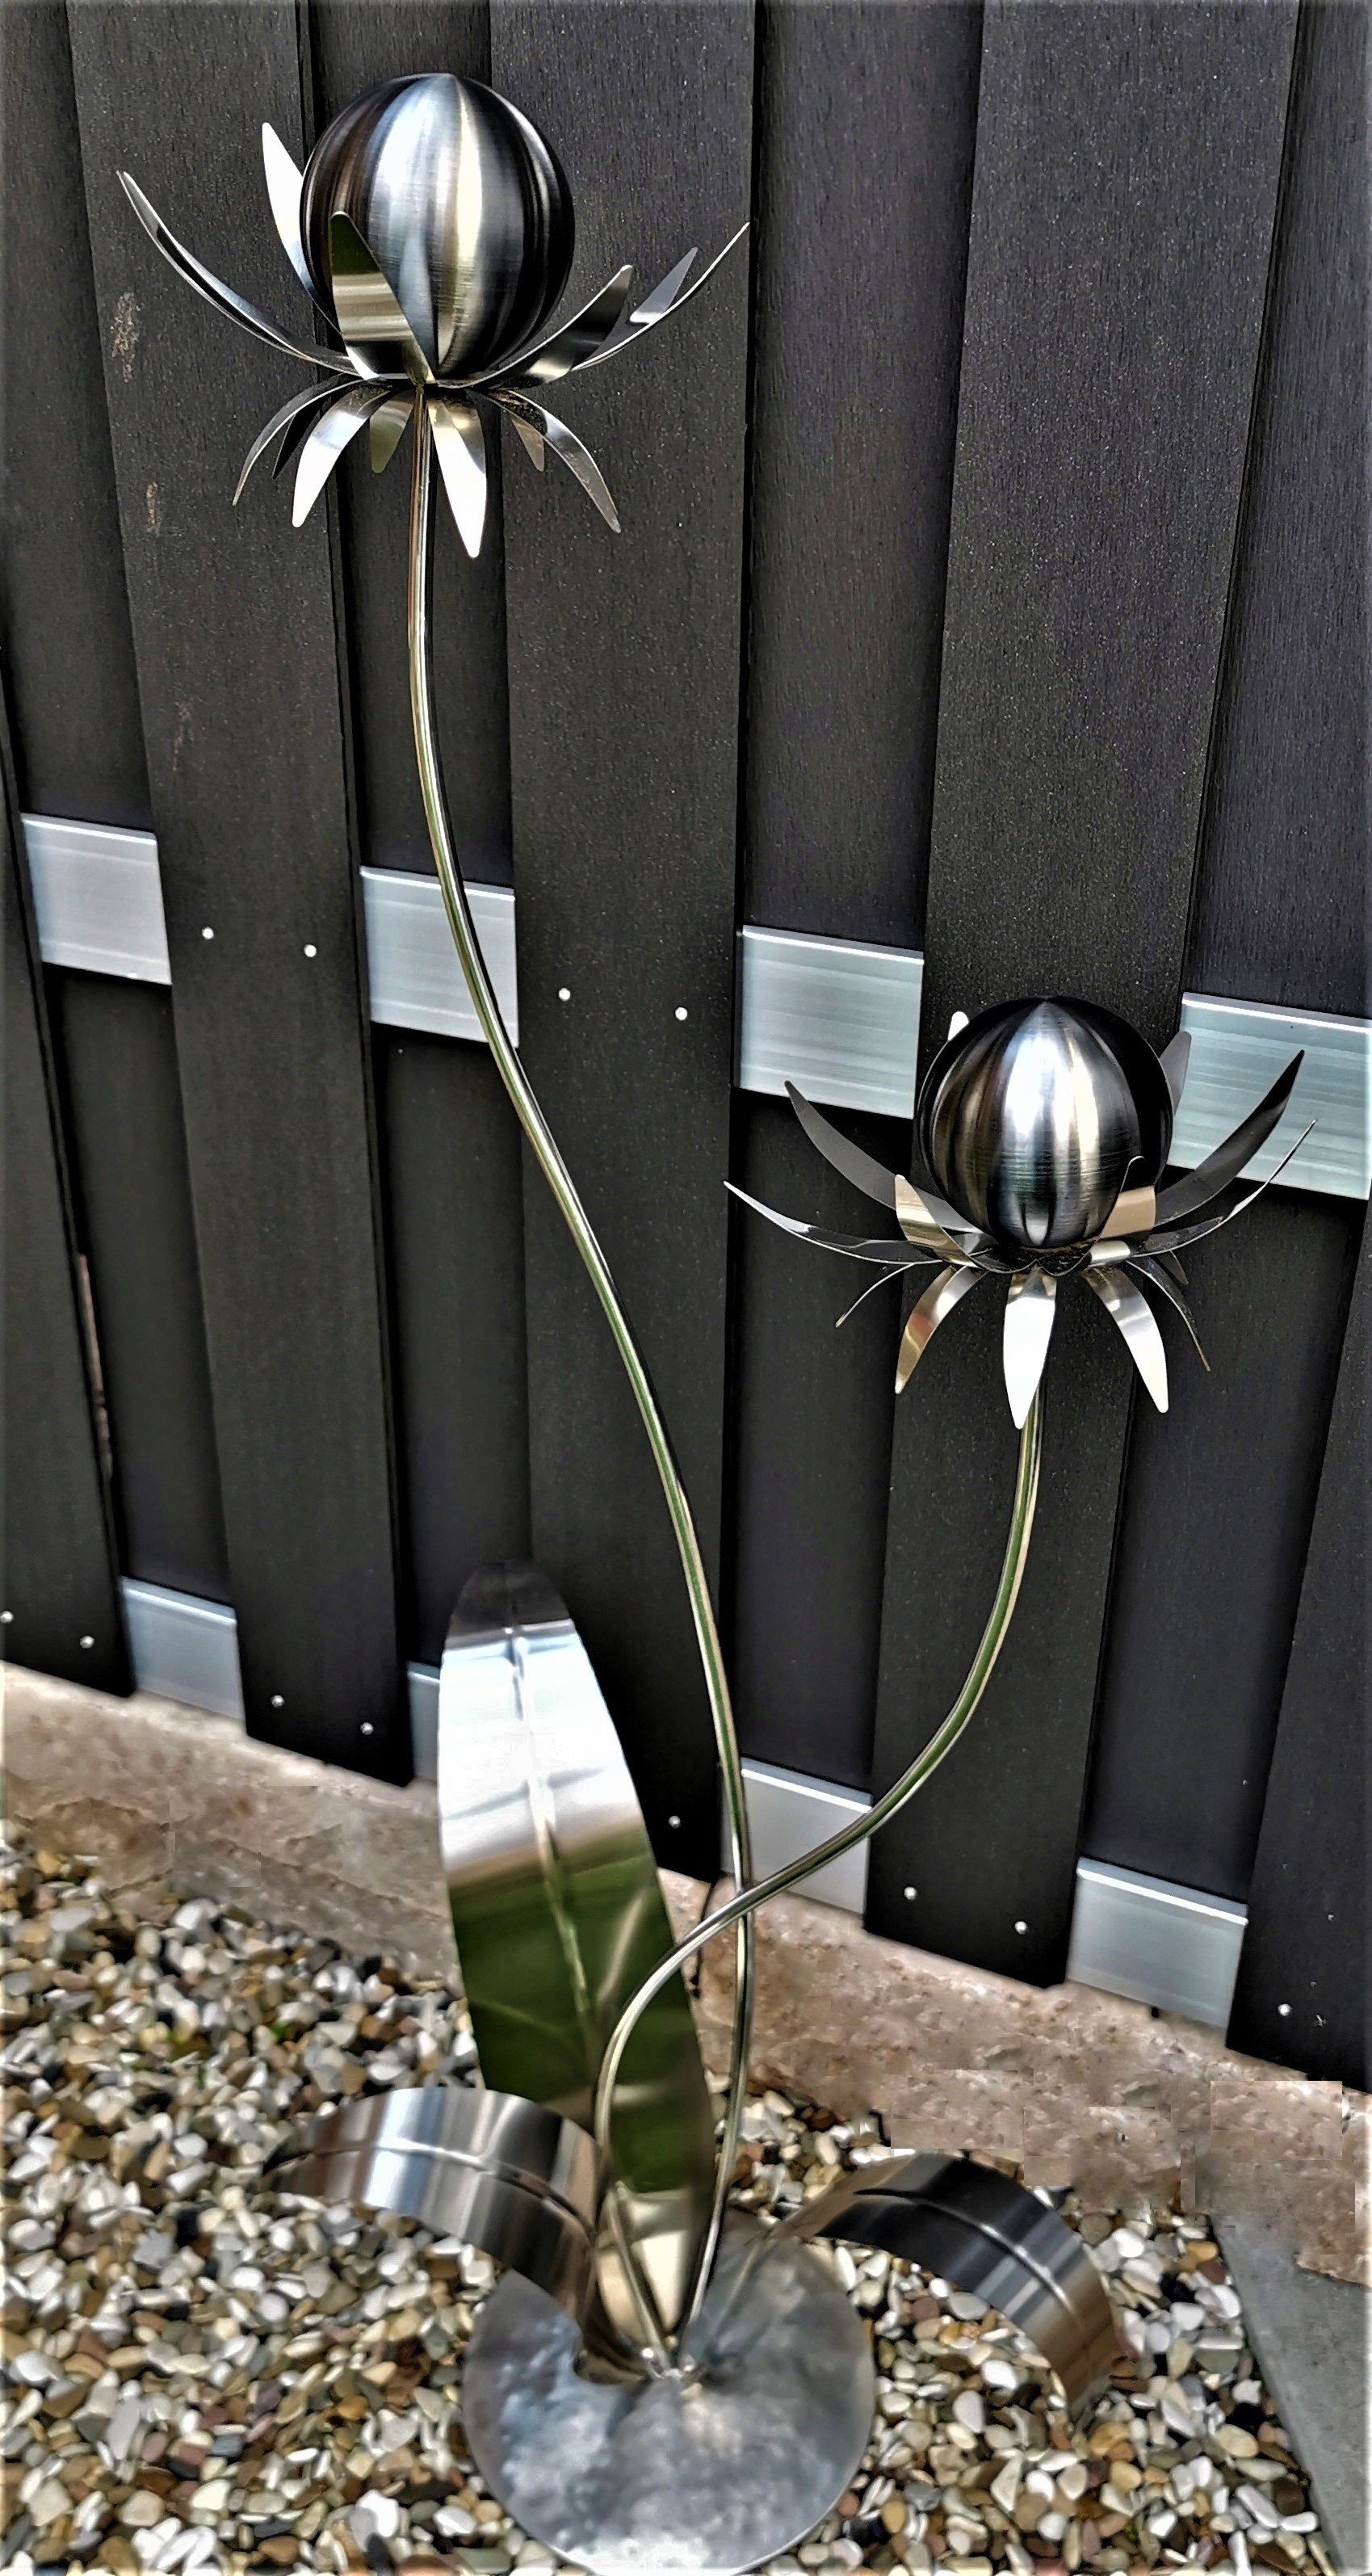 Jürgen Bocker Garten-Ambiente Edelstahl Skulptur Blume Milano schwarz 120 Standfuß cm Kugel Gartenstecker Gartendeko matt Edelstahl